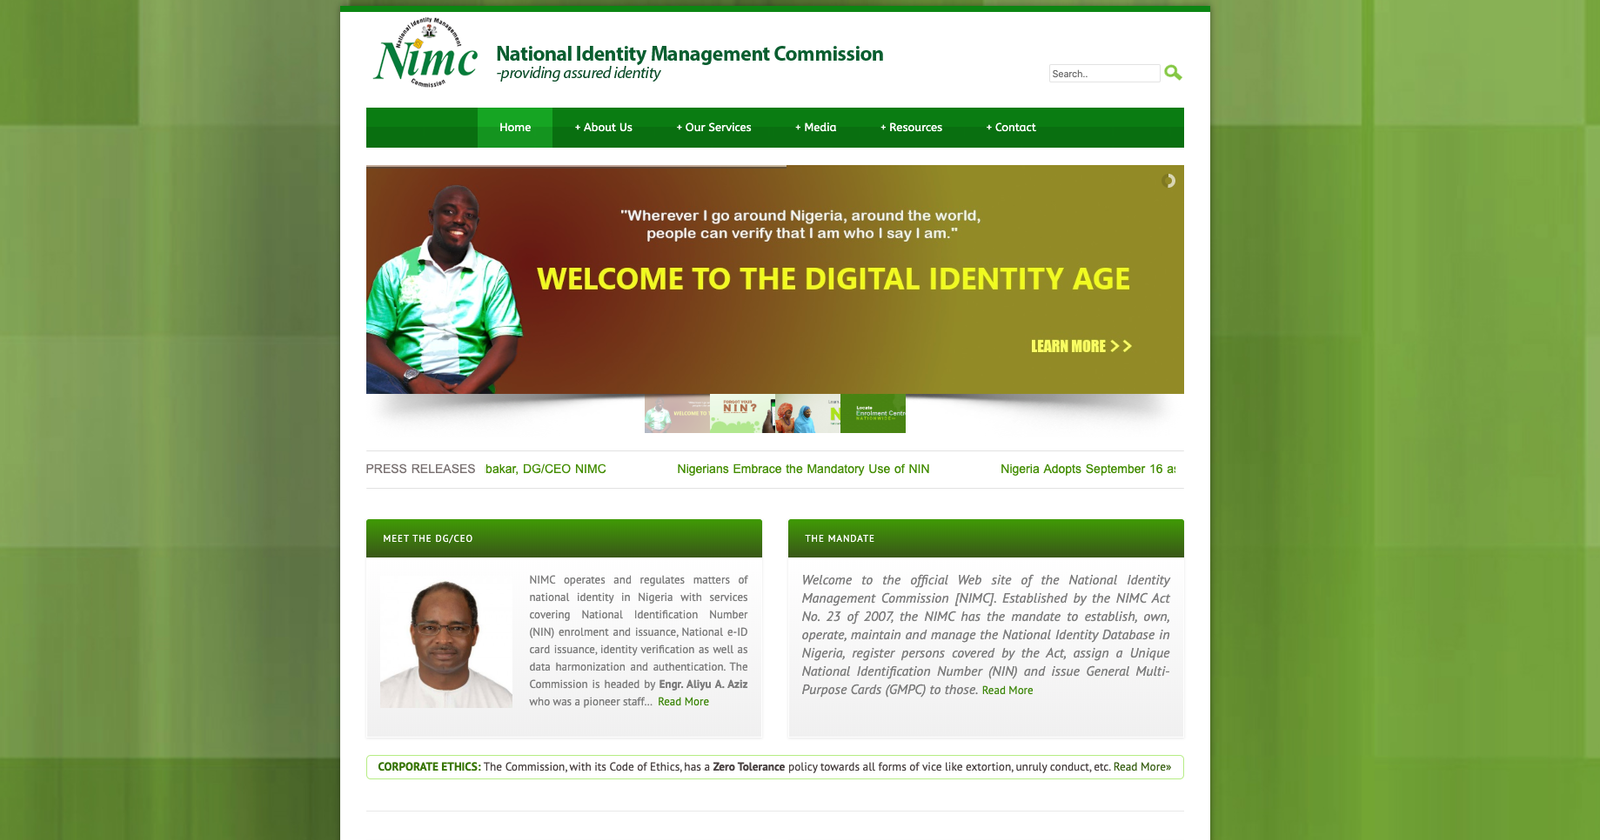 National Identity Number (Nin)